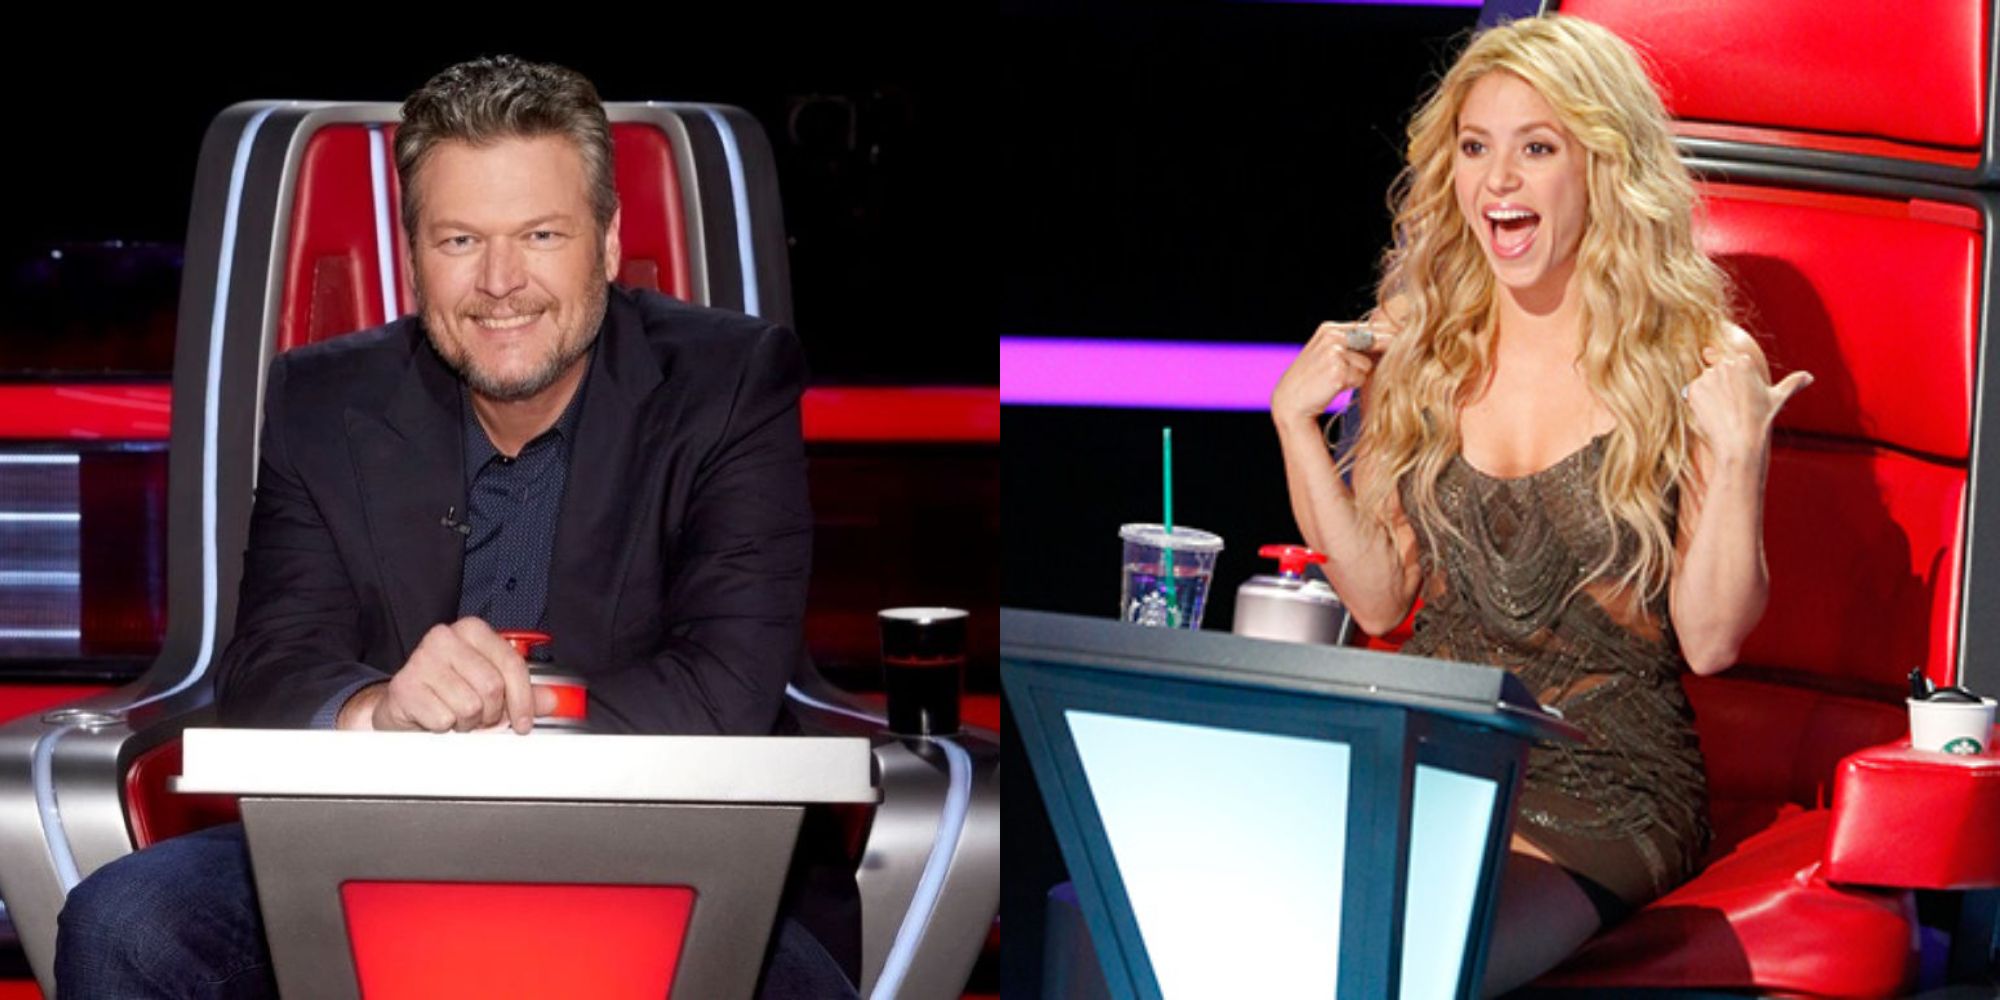 Split image showing Blake Shelton and Shakira in The Voice.